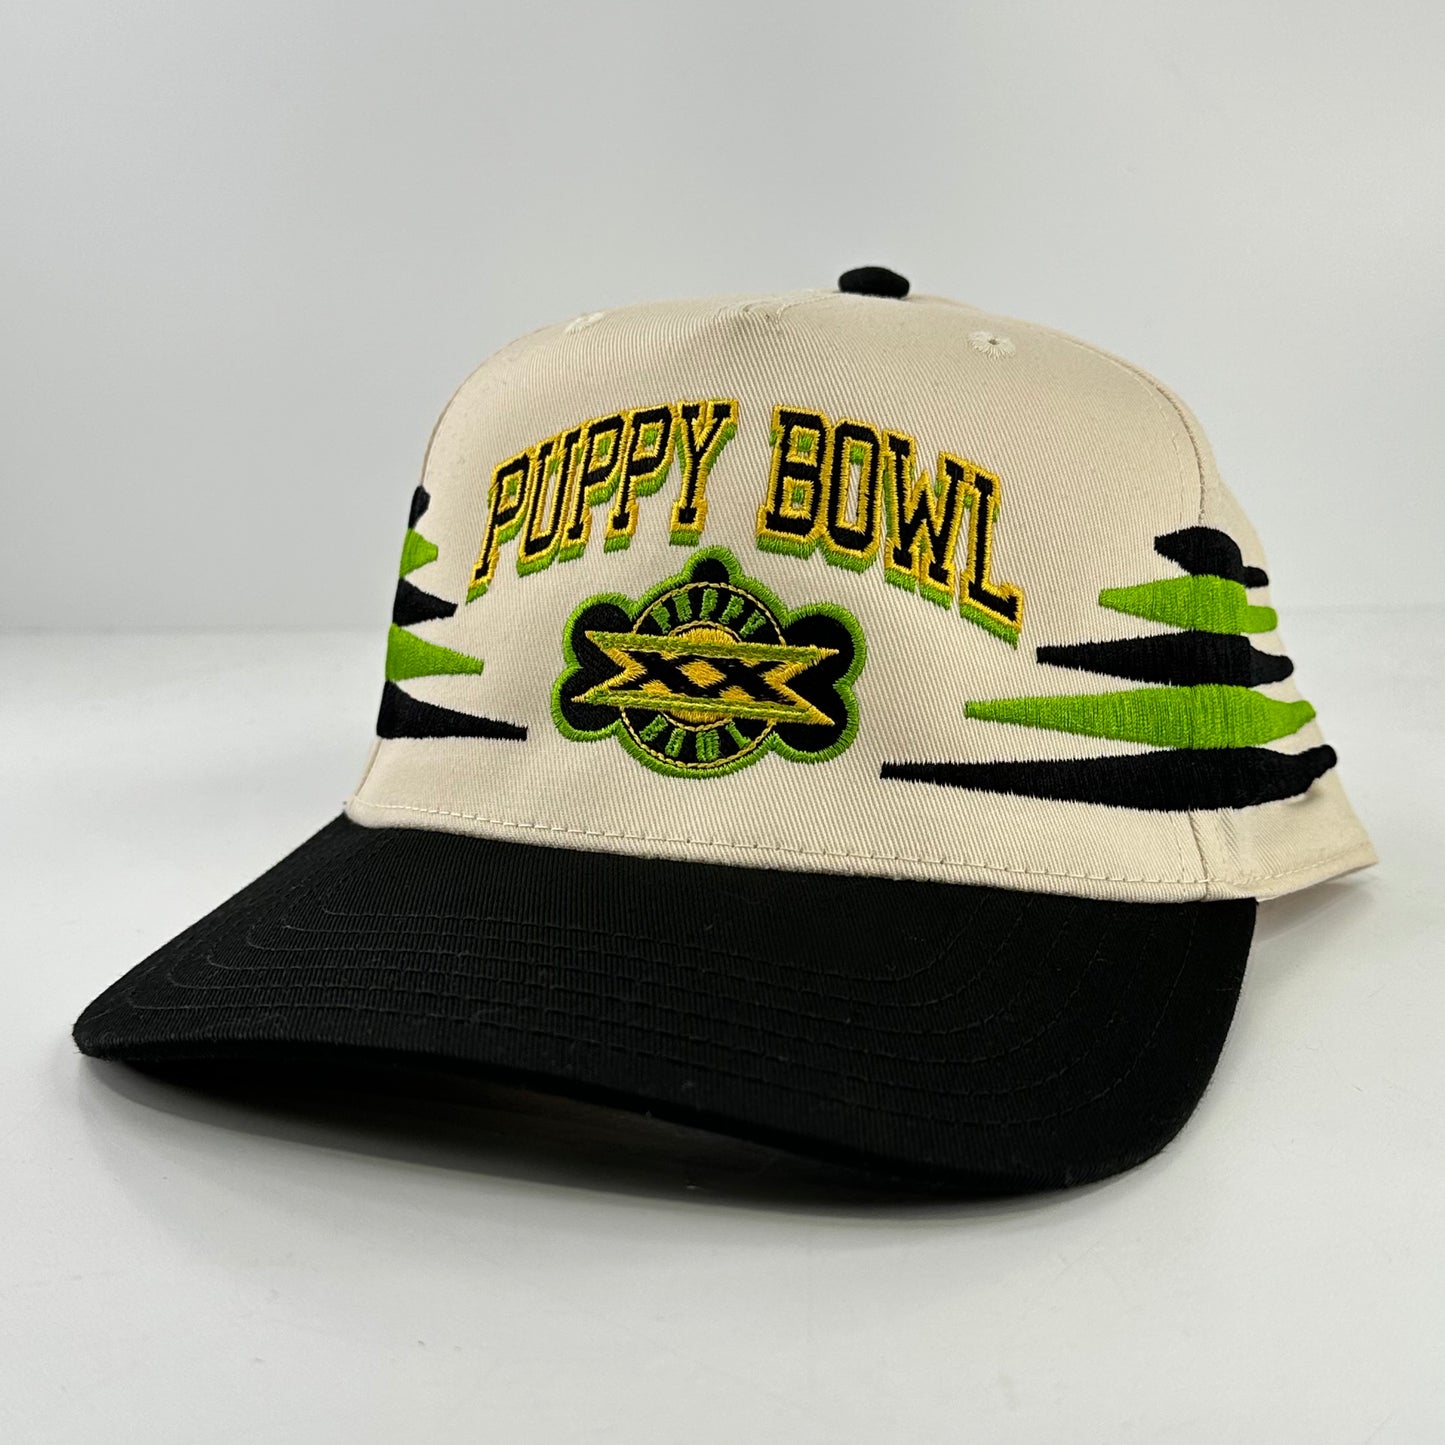 Puppy Bowl Diamond Cut Hat.